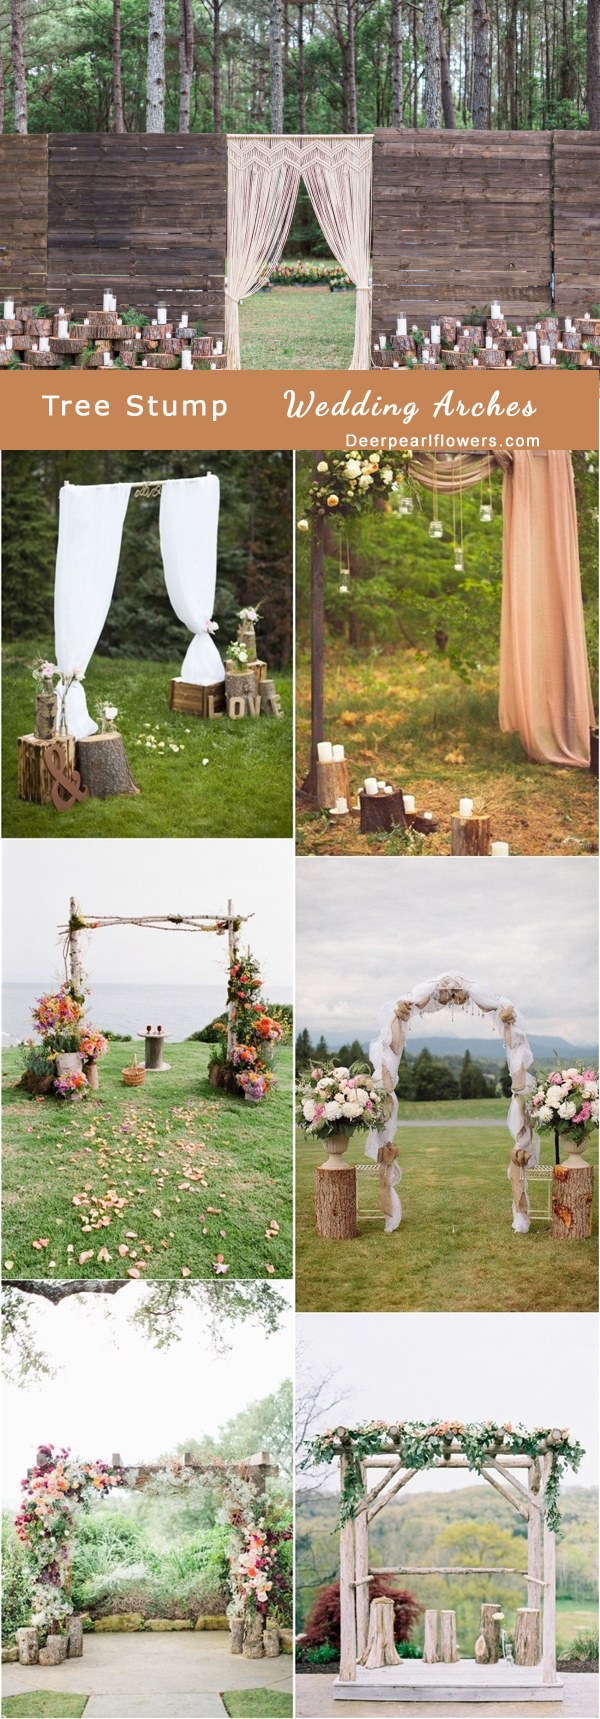 rustic tree stump wedding arch decor ideas